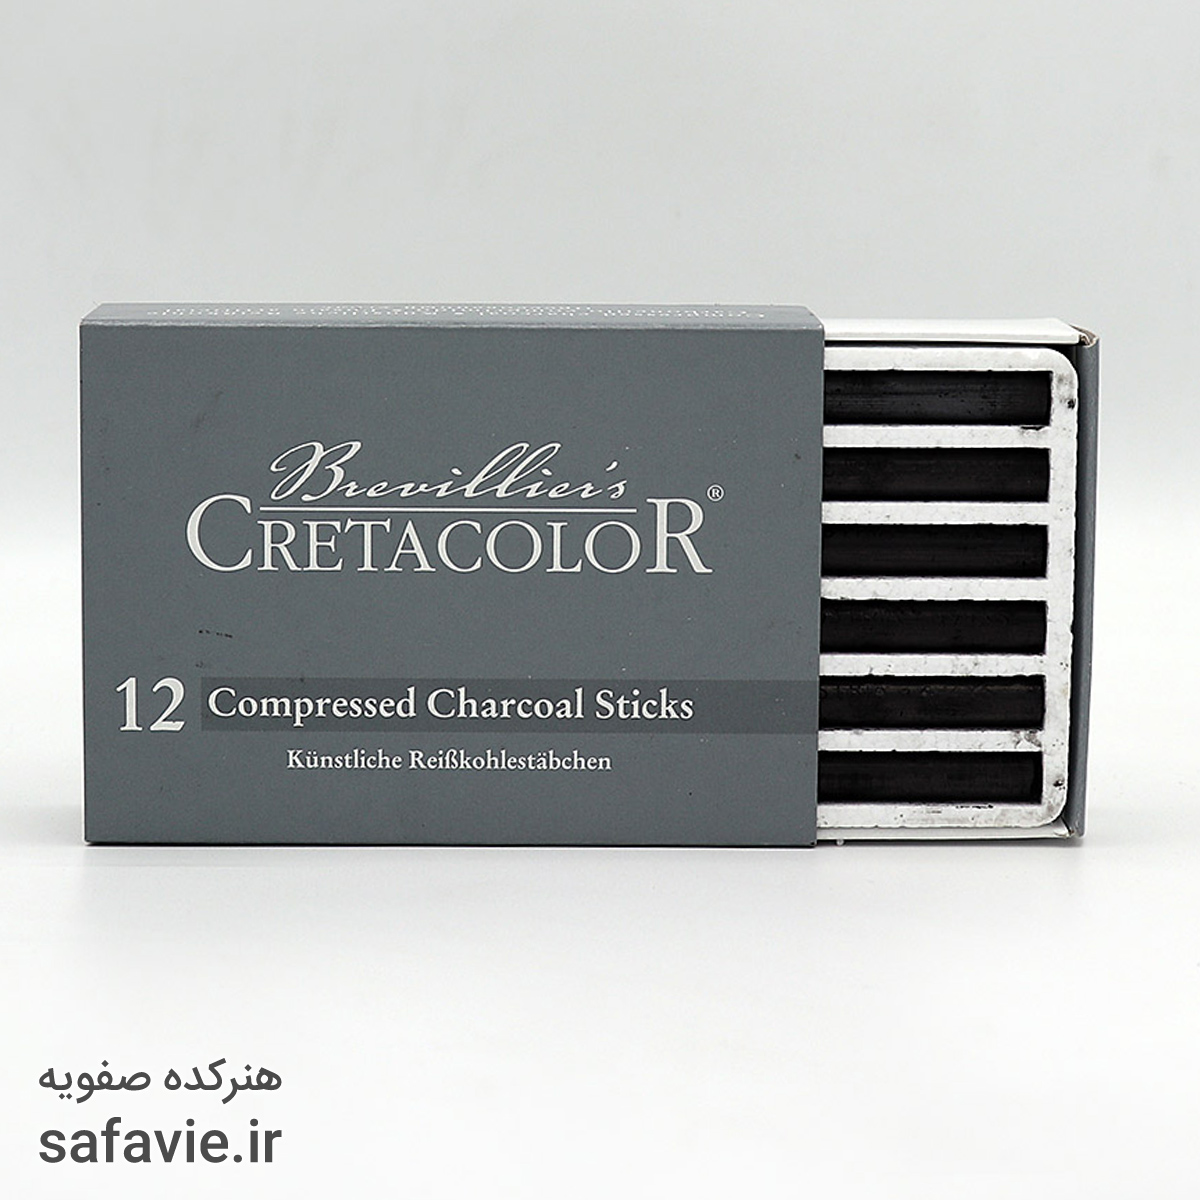 Cretacolor Compressed Charcoal Sticks